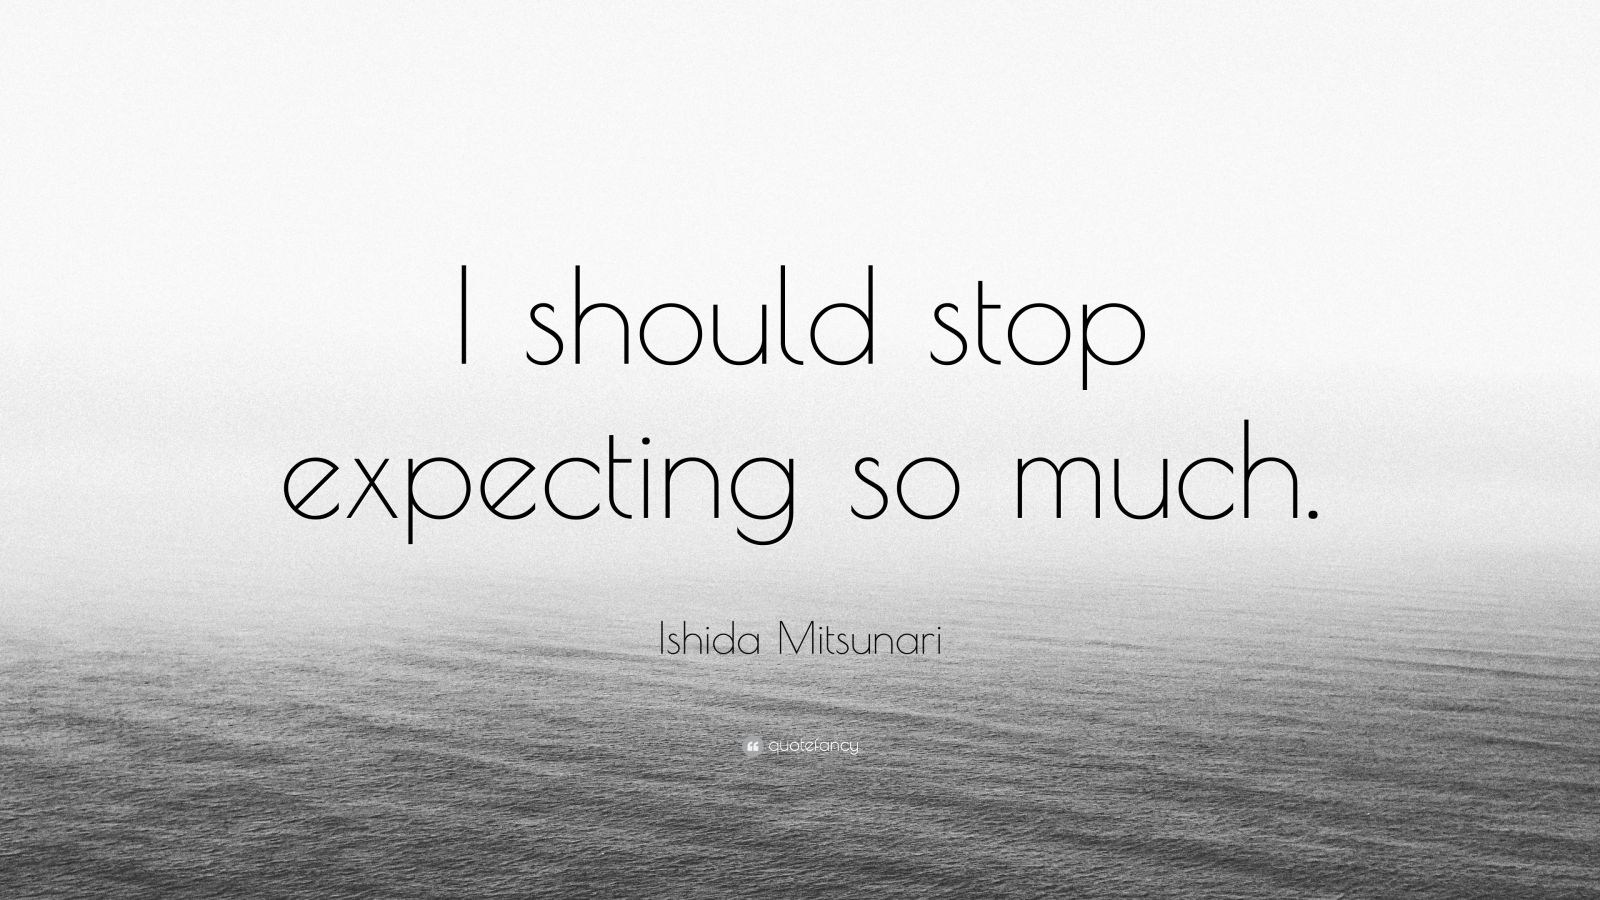 Ishida Mitsunari Quote: “I should stop expecting so much.”